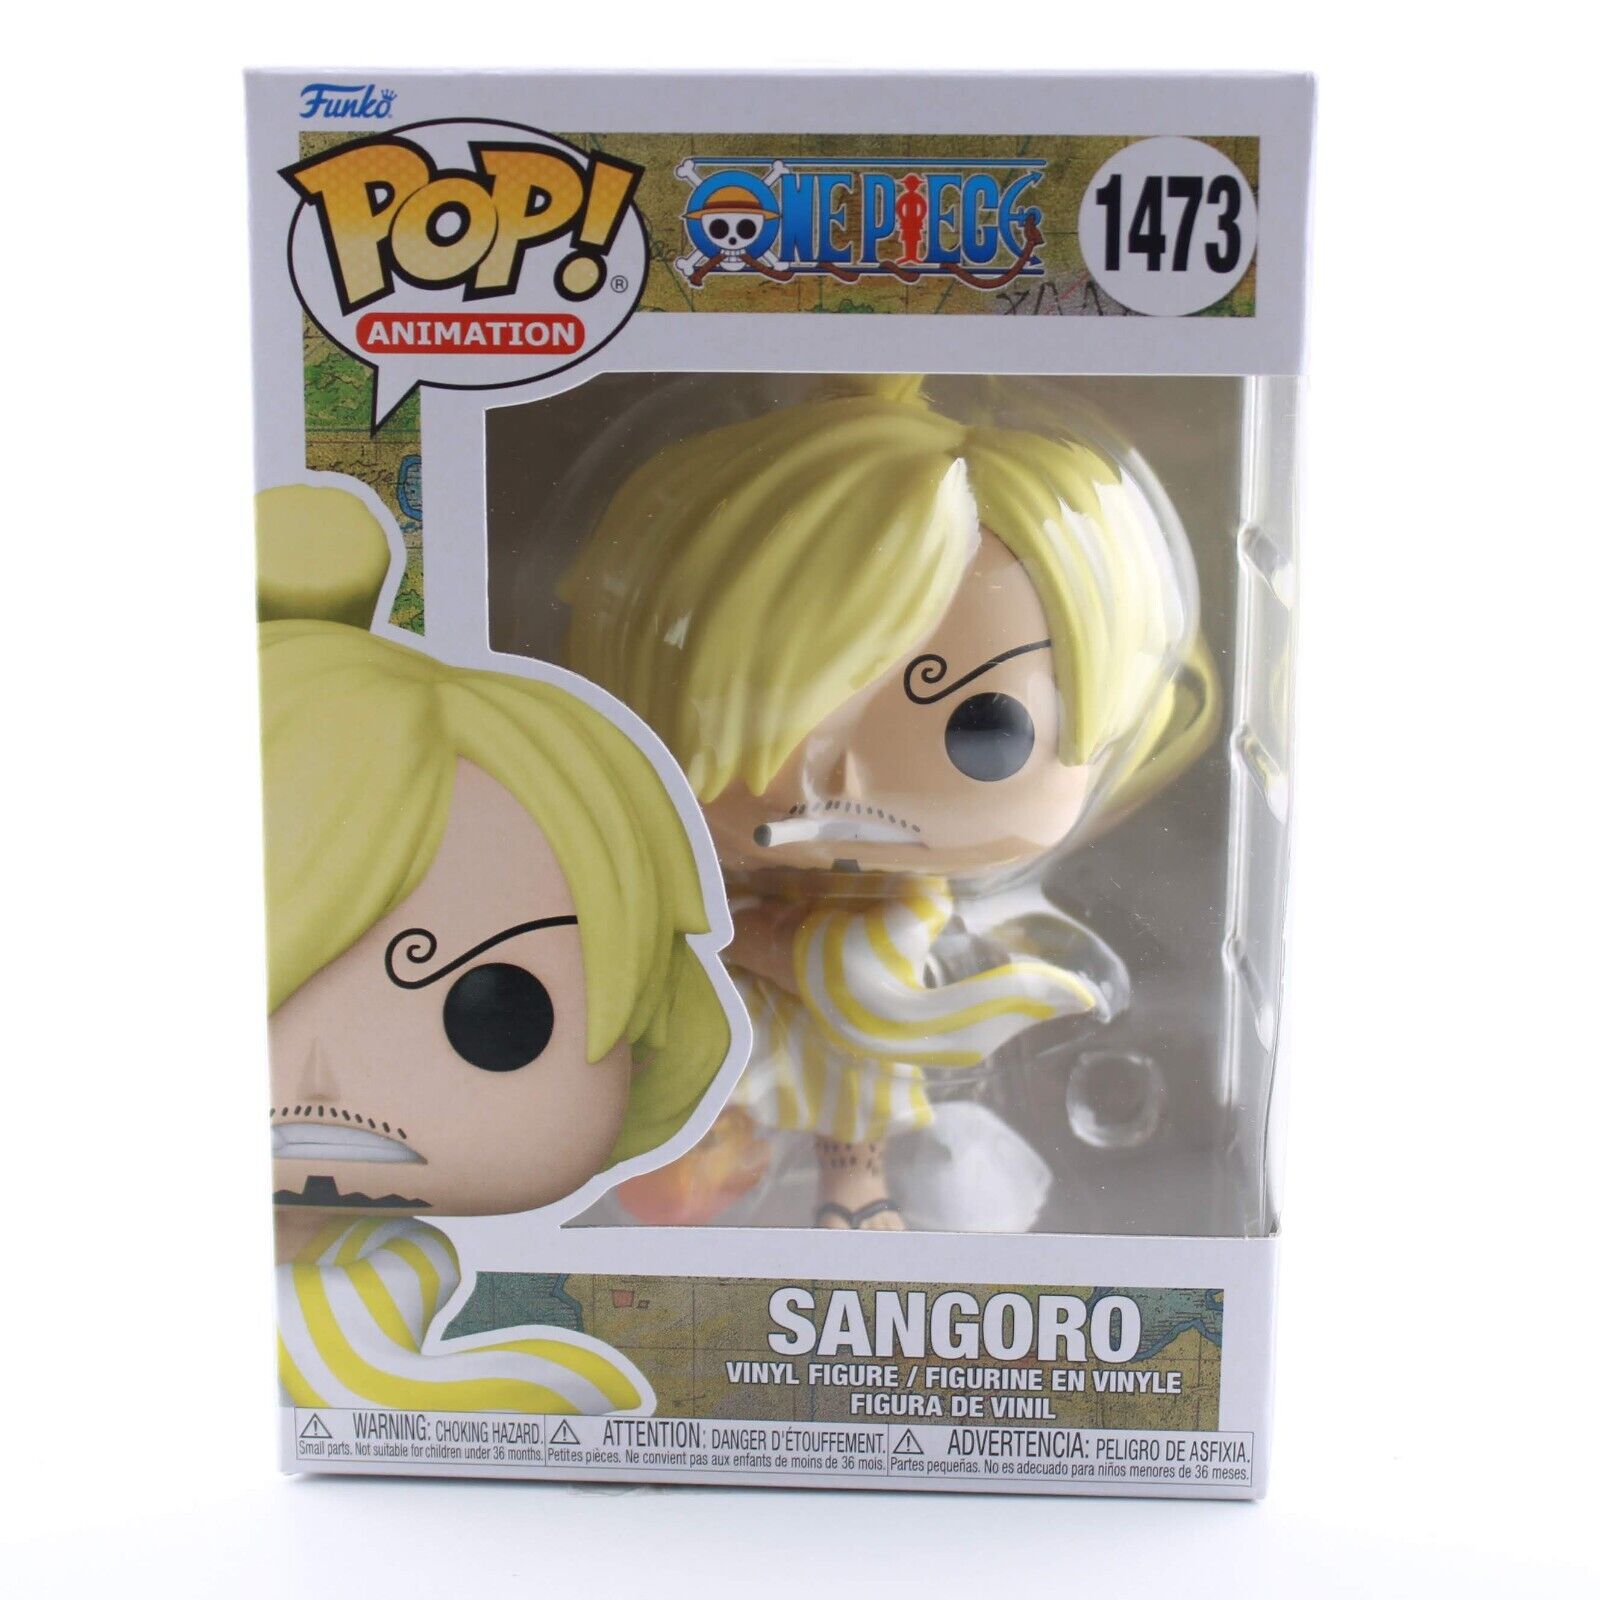 Funko Pop One Piece Anime S7 Sangoro / Sanji Vinyl Figure # 1473